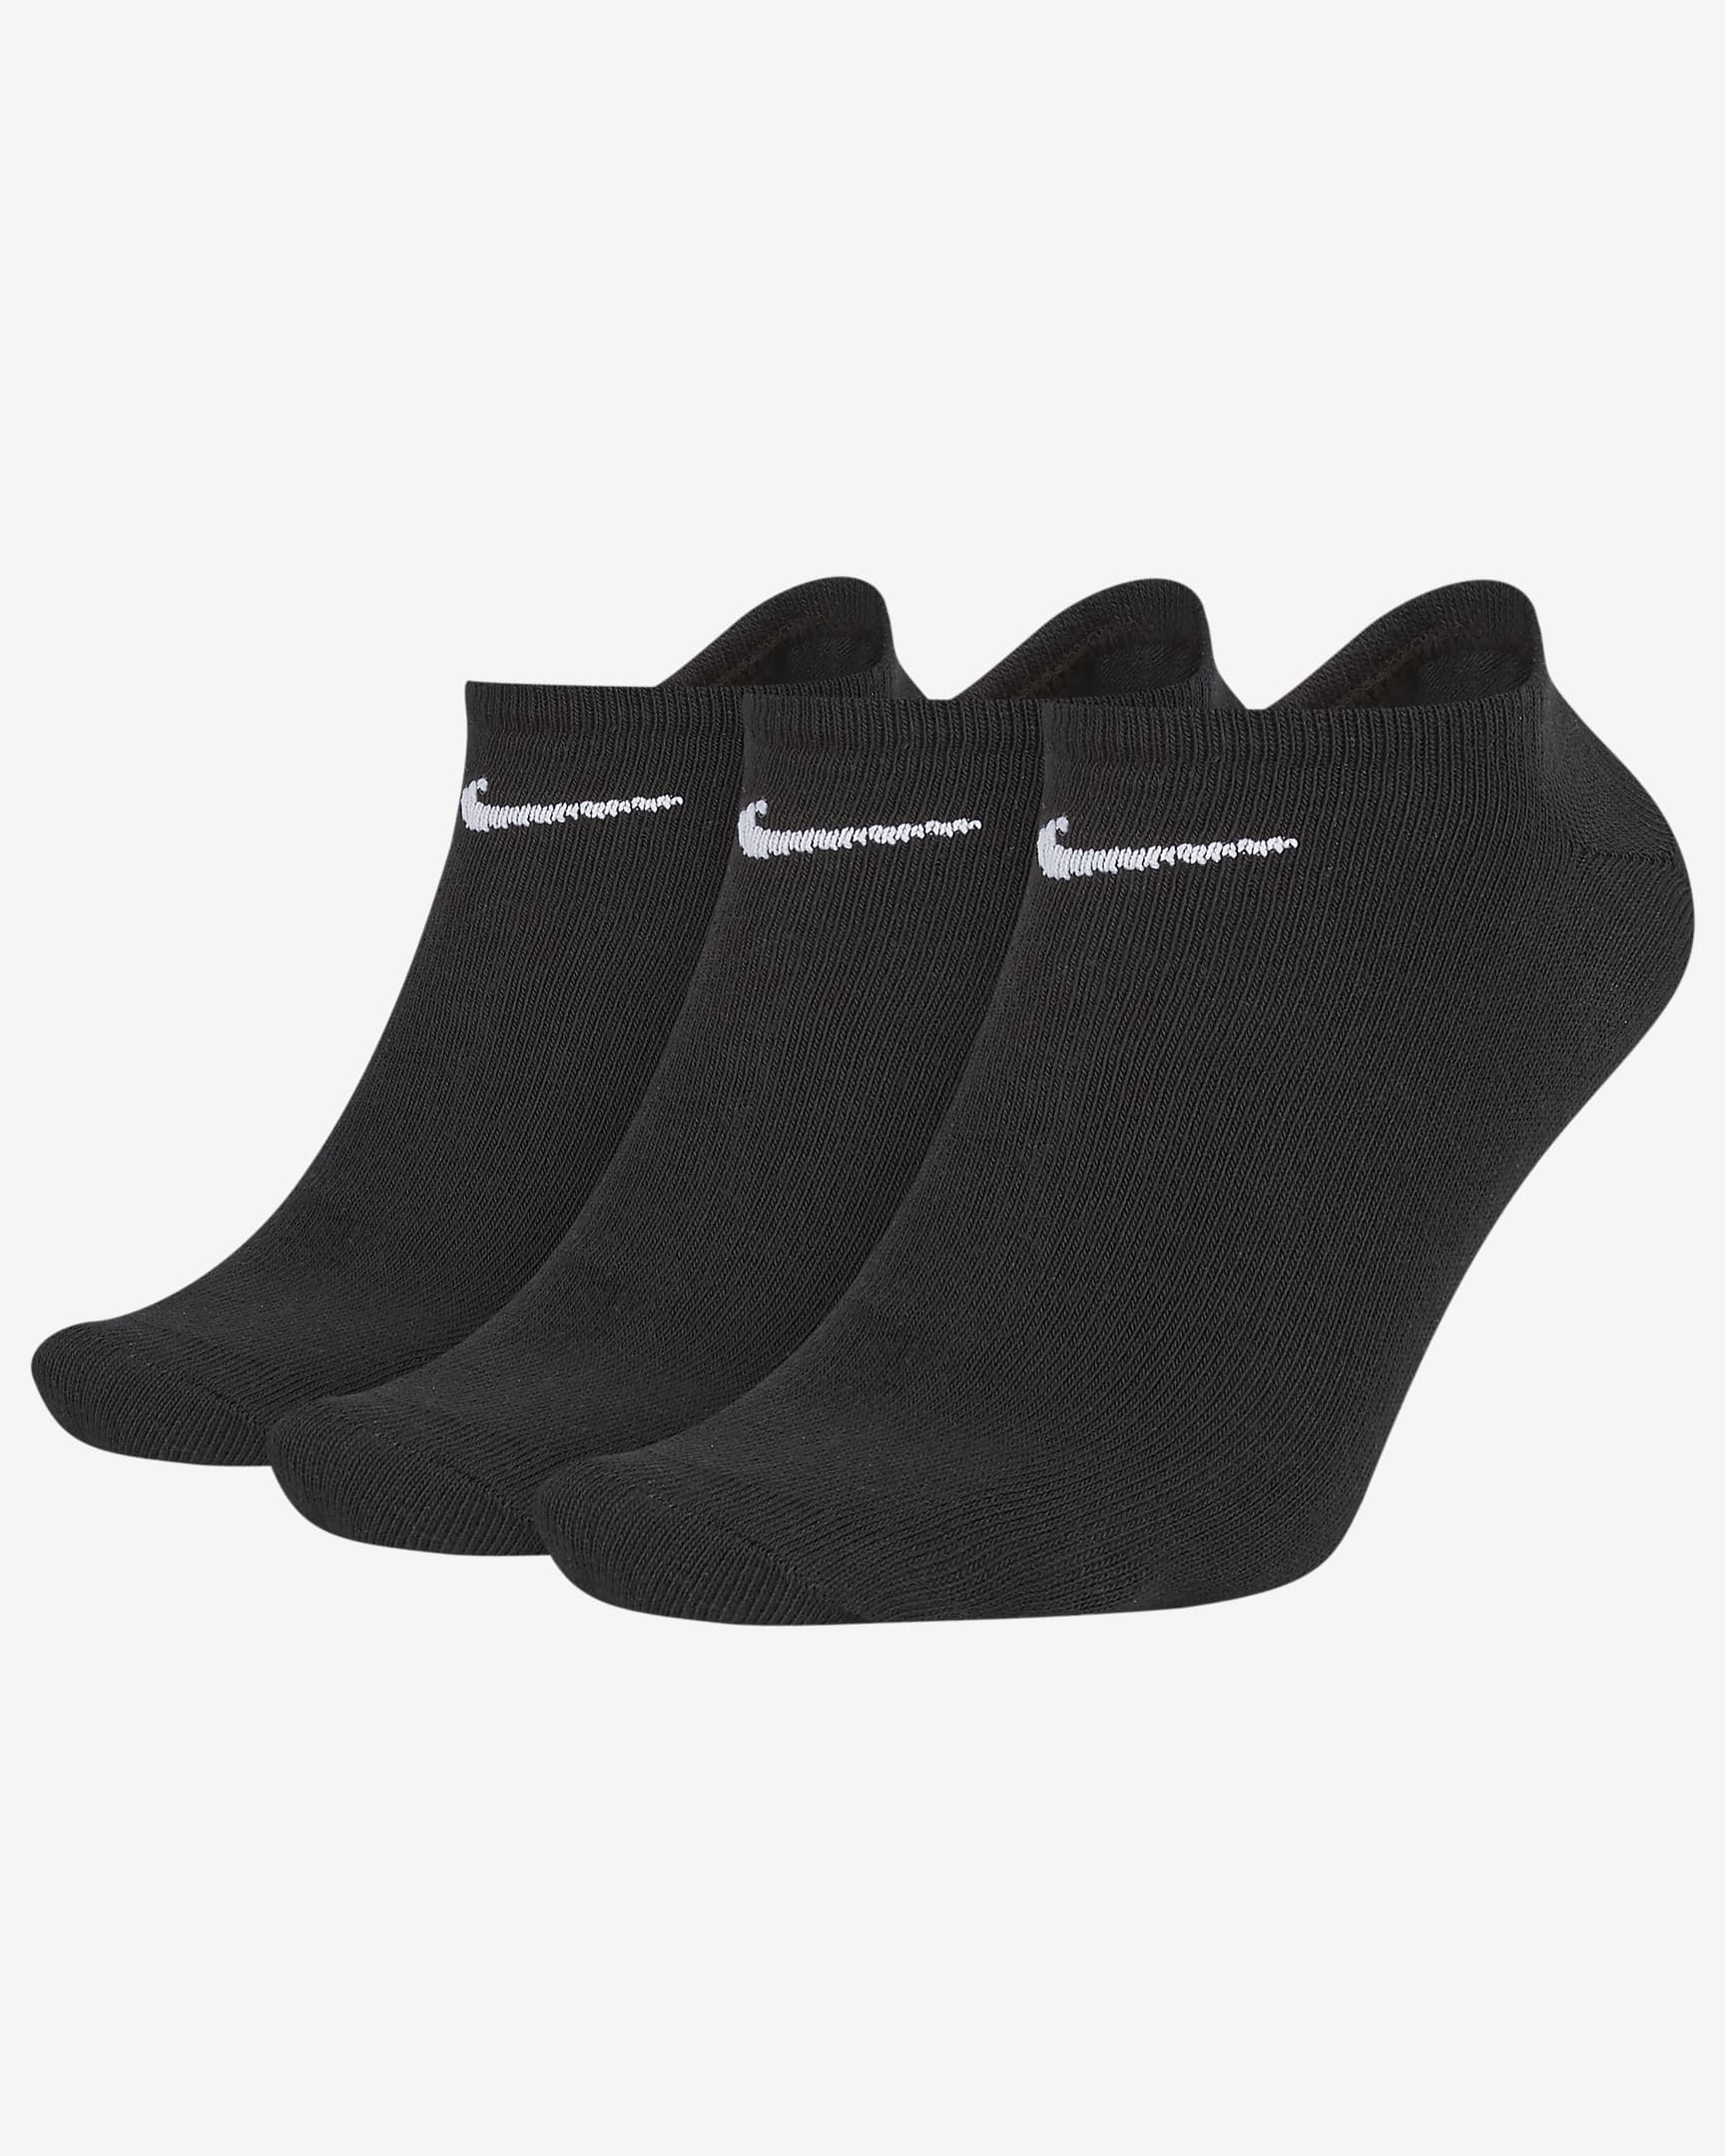 Nike Lightweight Training No-Show Socks (3 Pairs) - Black/White